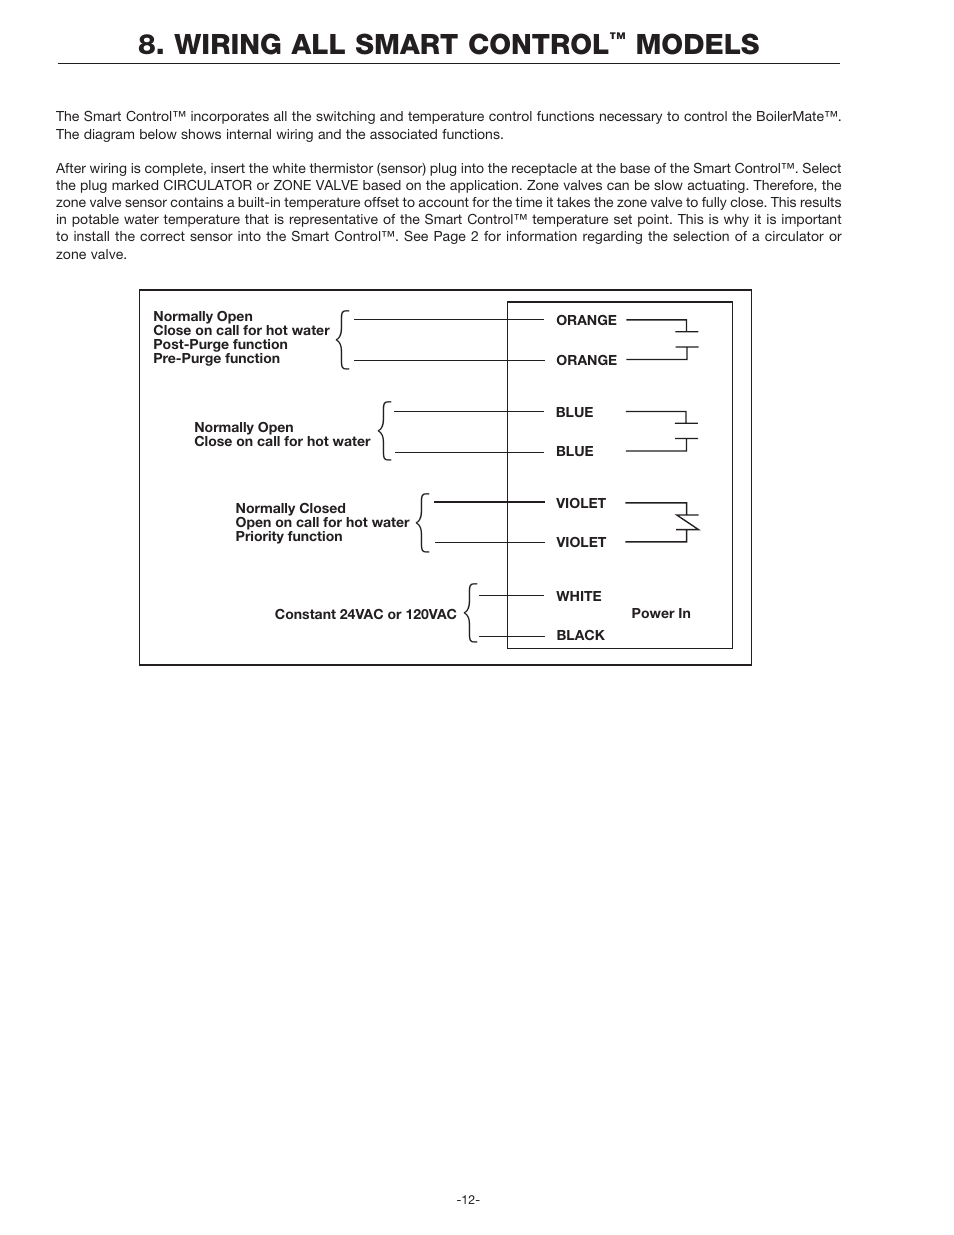 Wiring all smart control, Models | Amtrol BoilerMate Top Down User Manual |  Page 12 / 32 | Original mode Smart Car Engine Diagram Manuals Directory